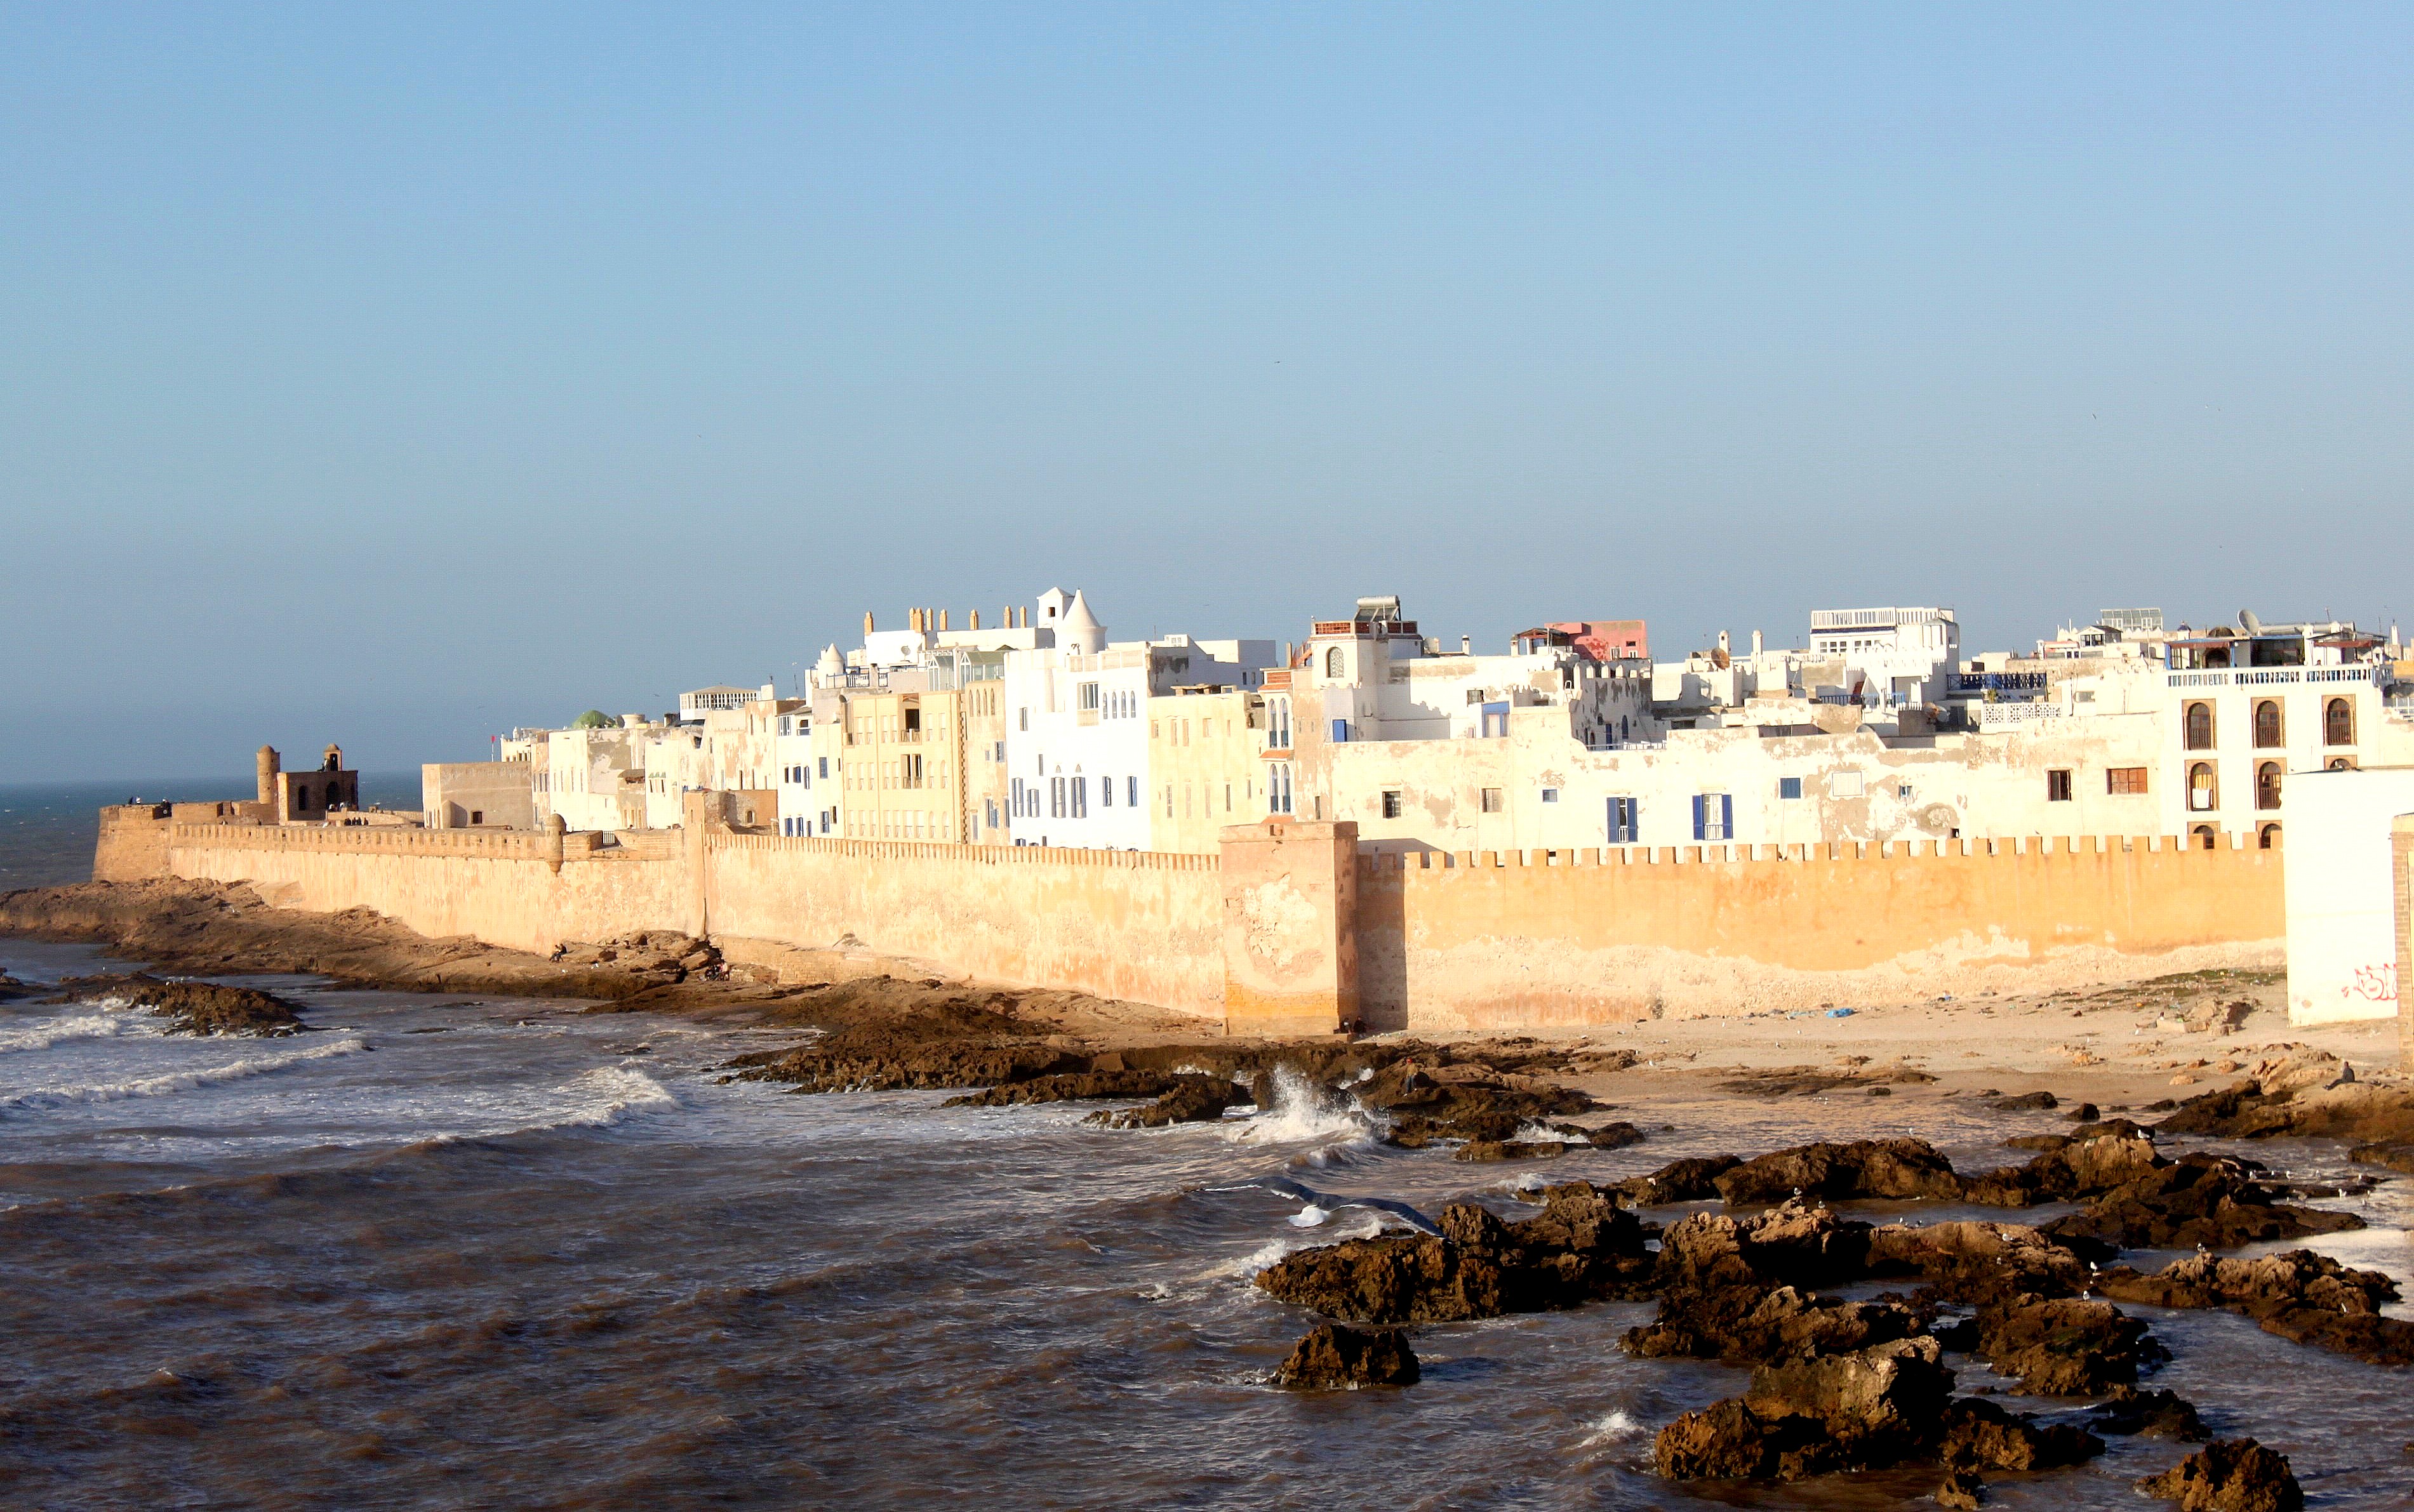 File:Essaouira, Morocco.JPG - Wikimedia Commons